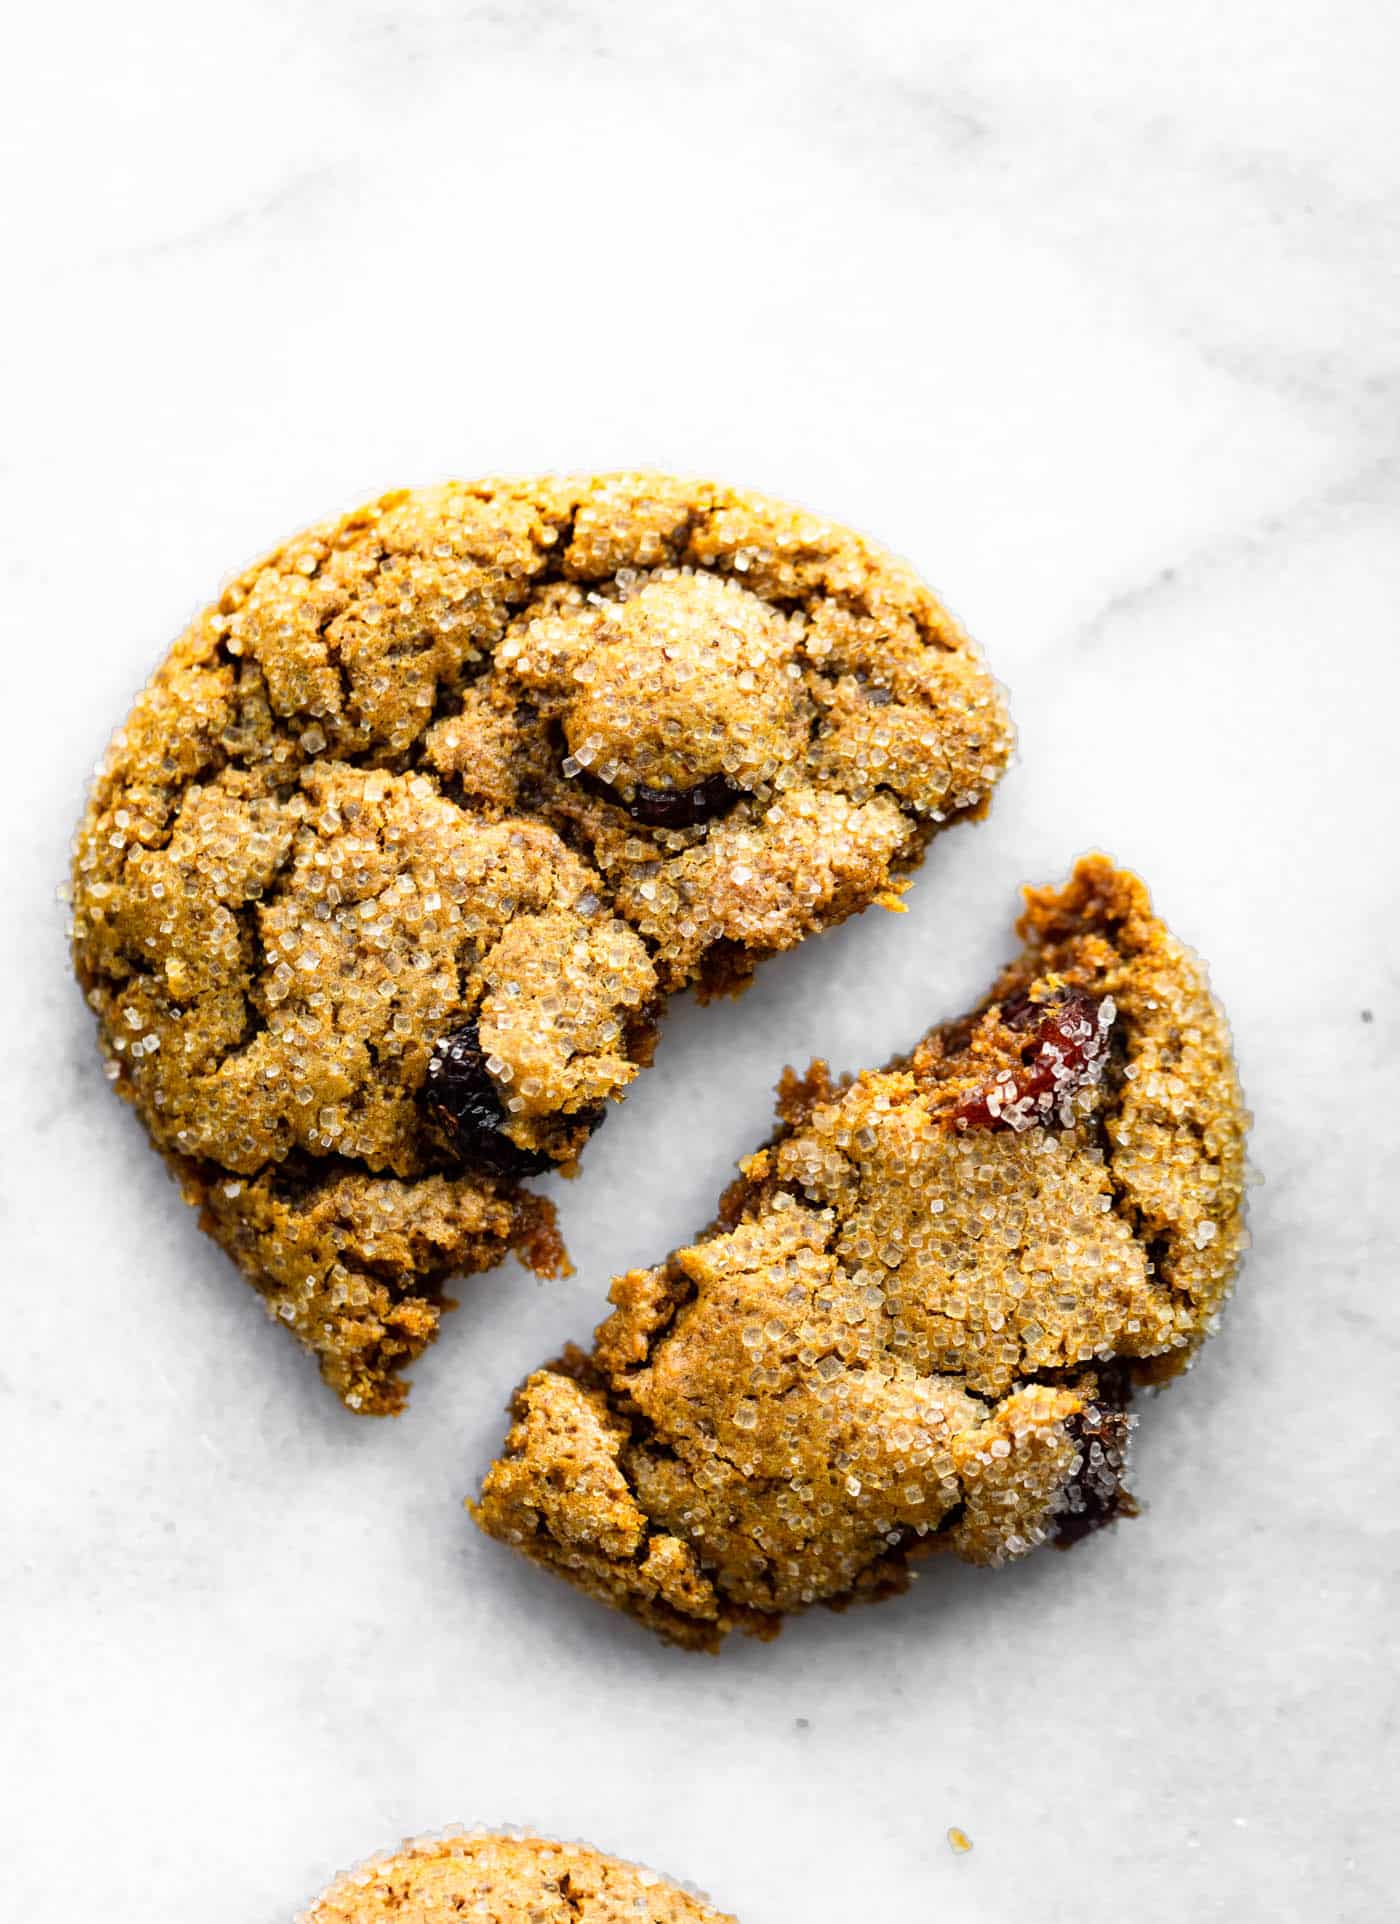 a gluten free vegan molasses cookie split in half